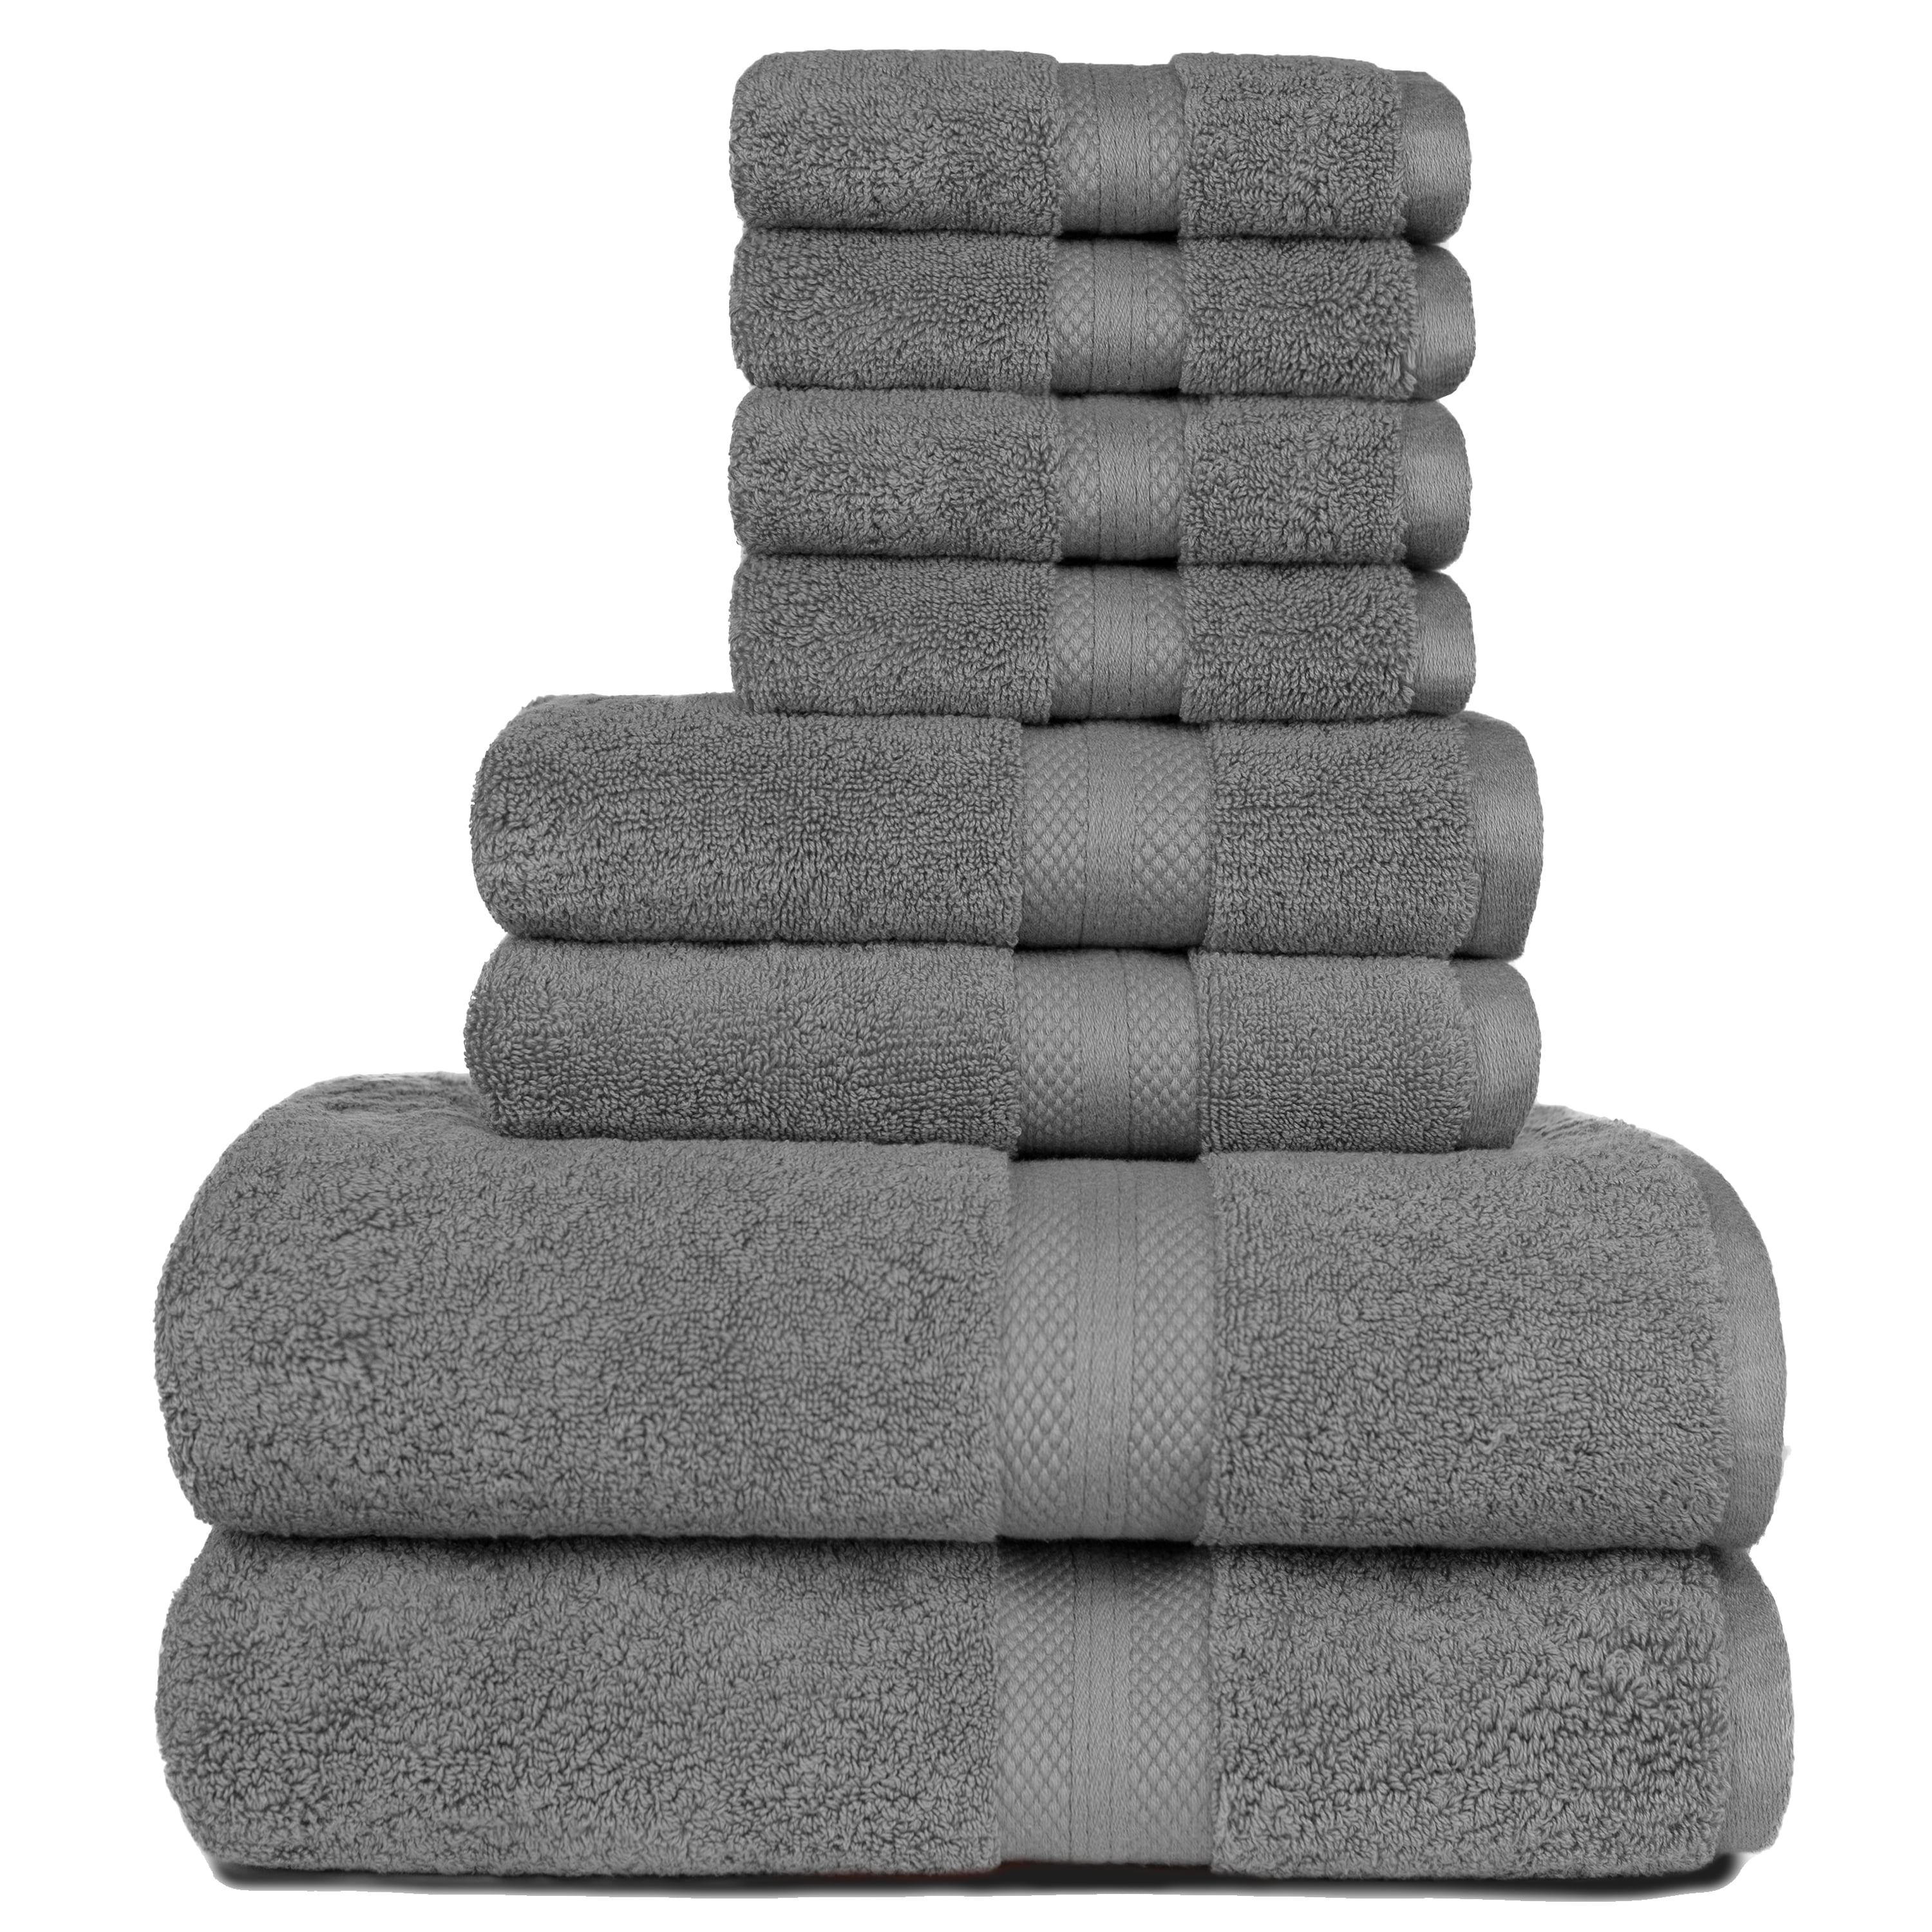 Bath towel Upscale Face towel soft absorbent lace 29"X13.8" Big Dry hair towel 